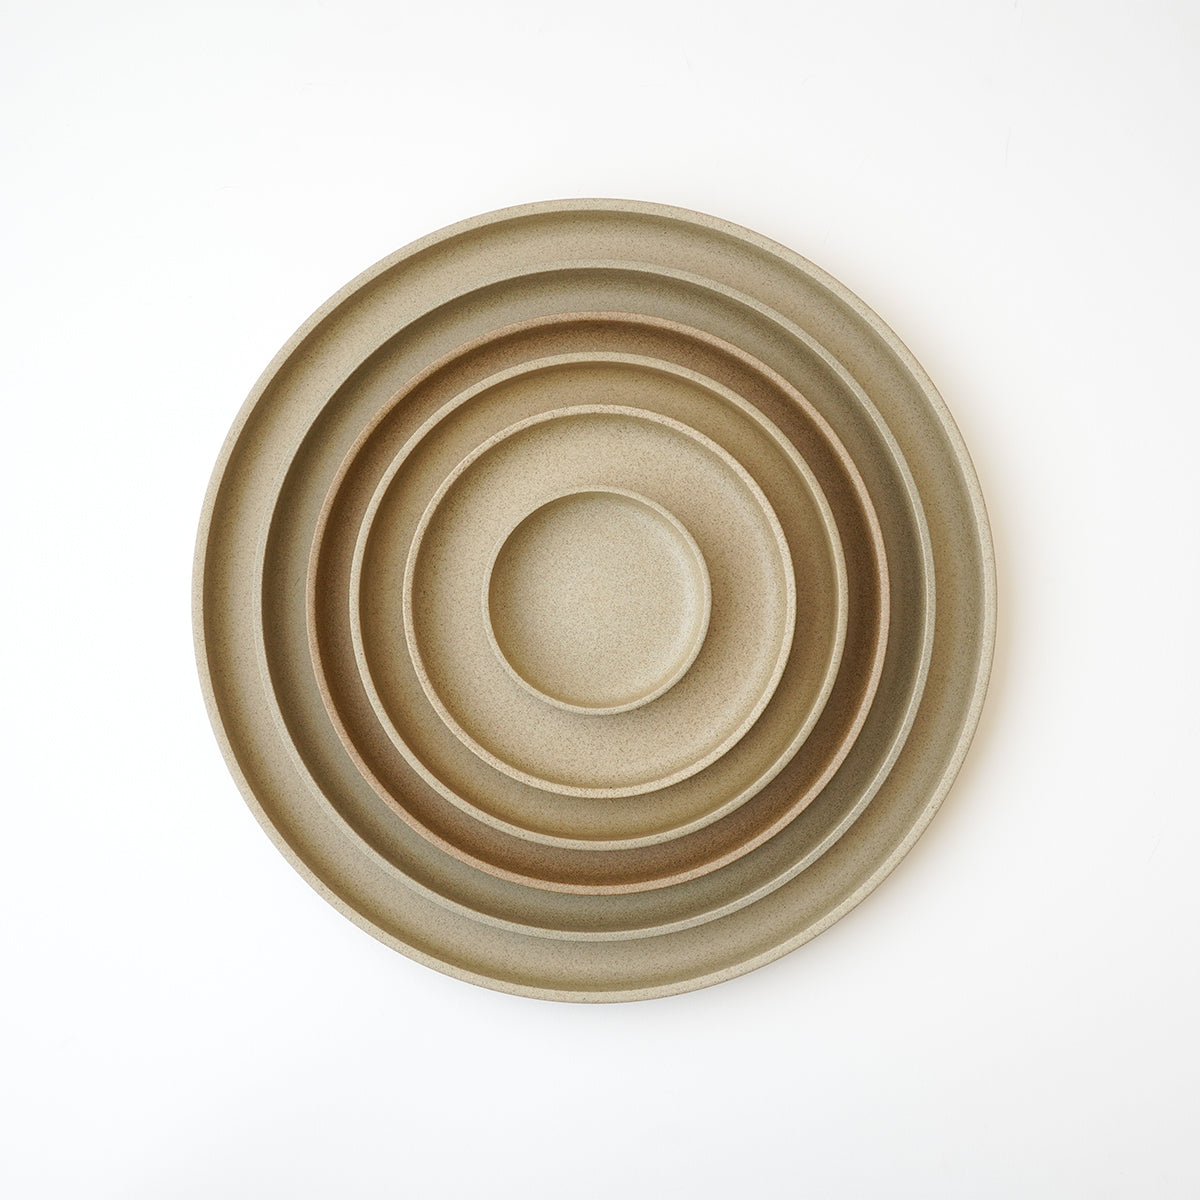 Hasami Porcelain Plate 3 3/8" Natural